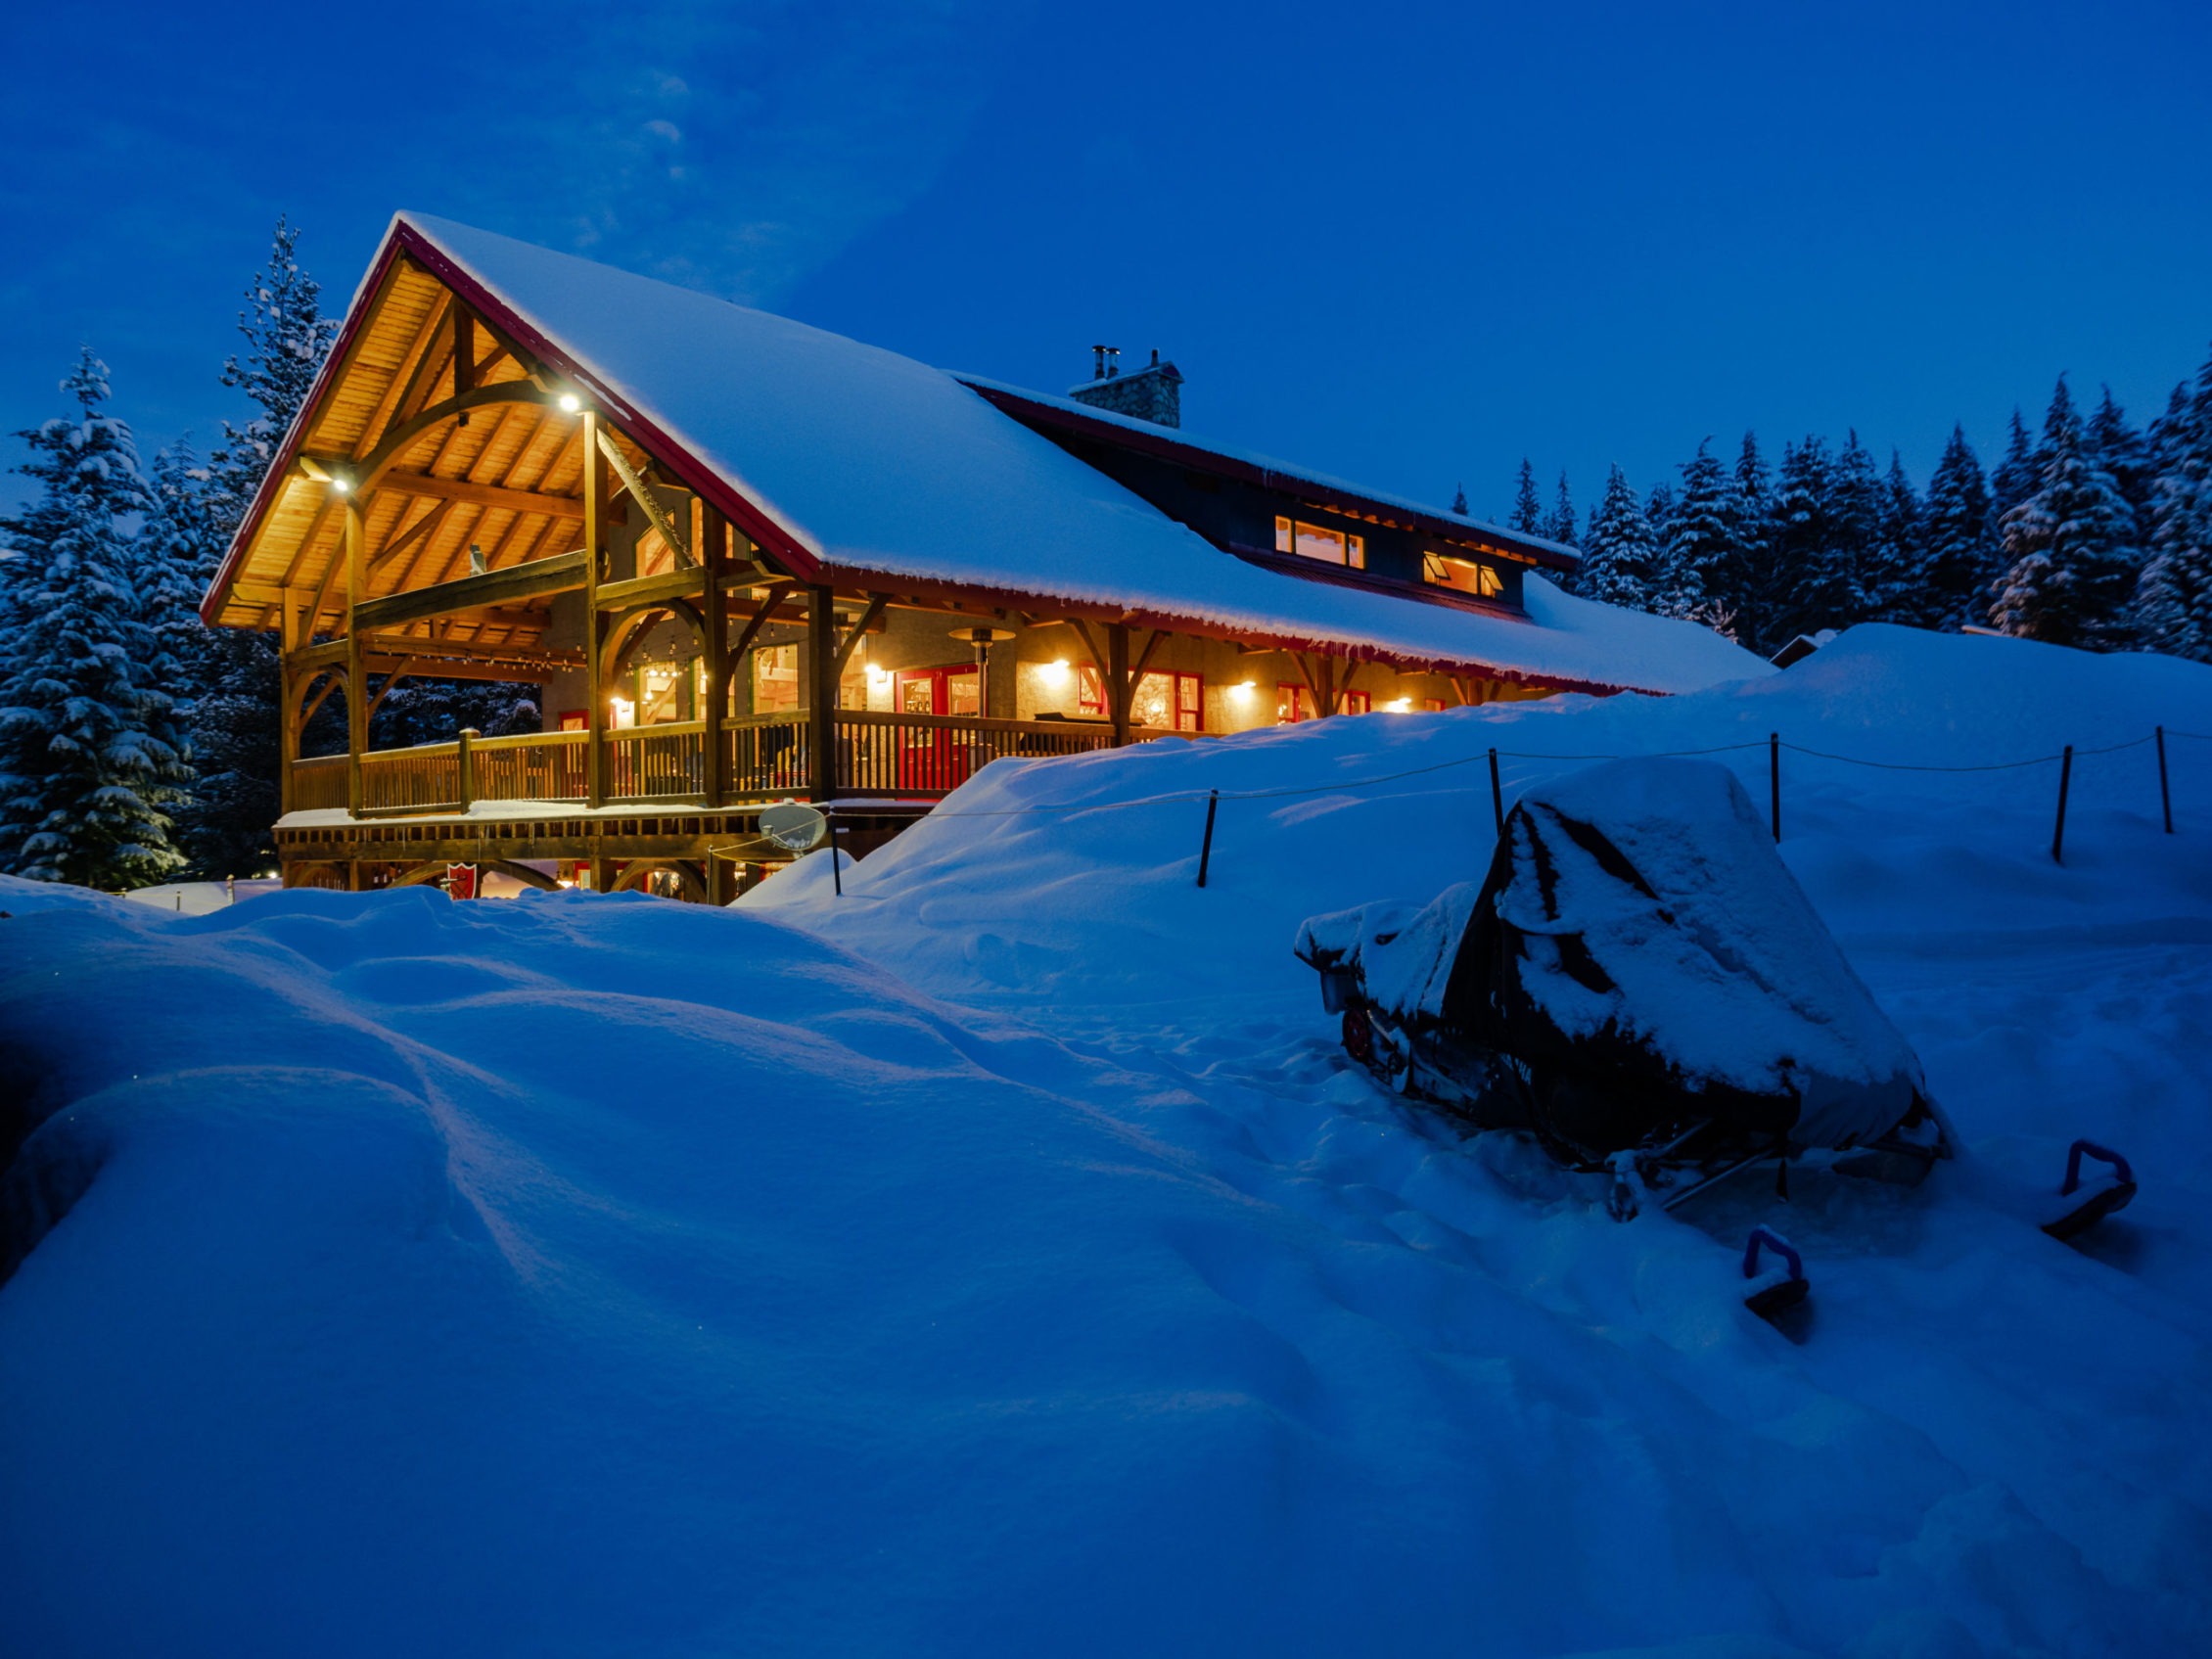 Snowy cabin at night